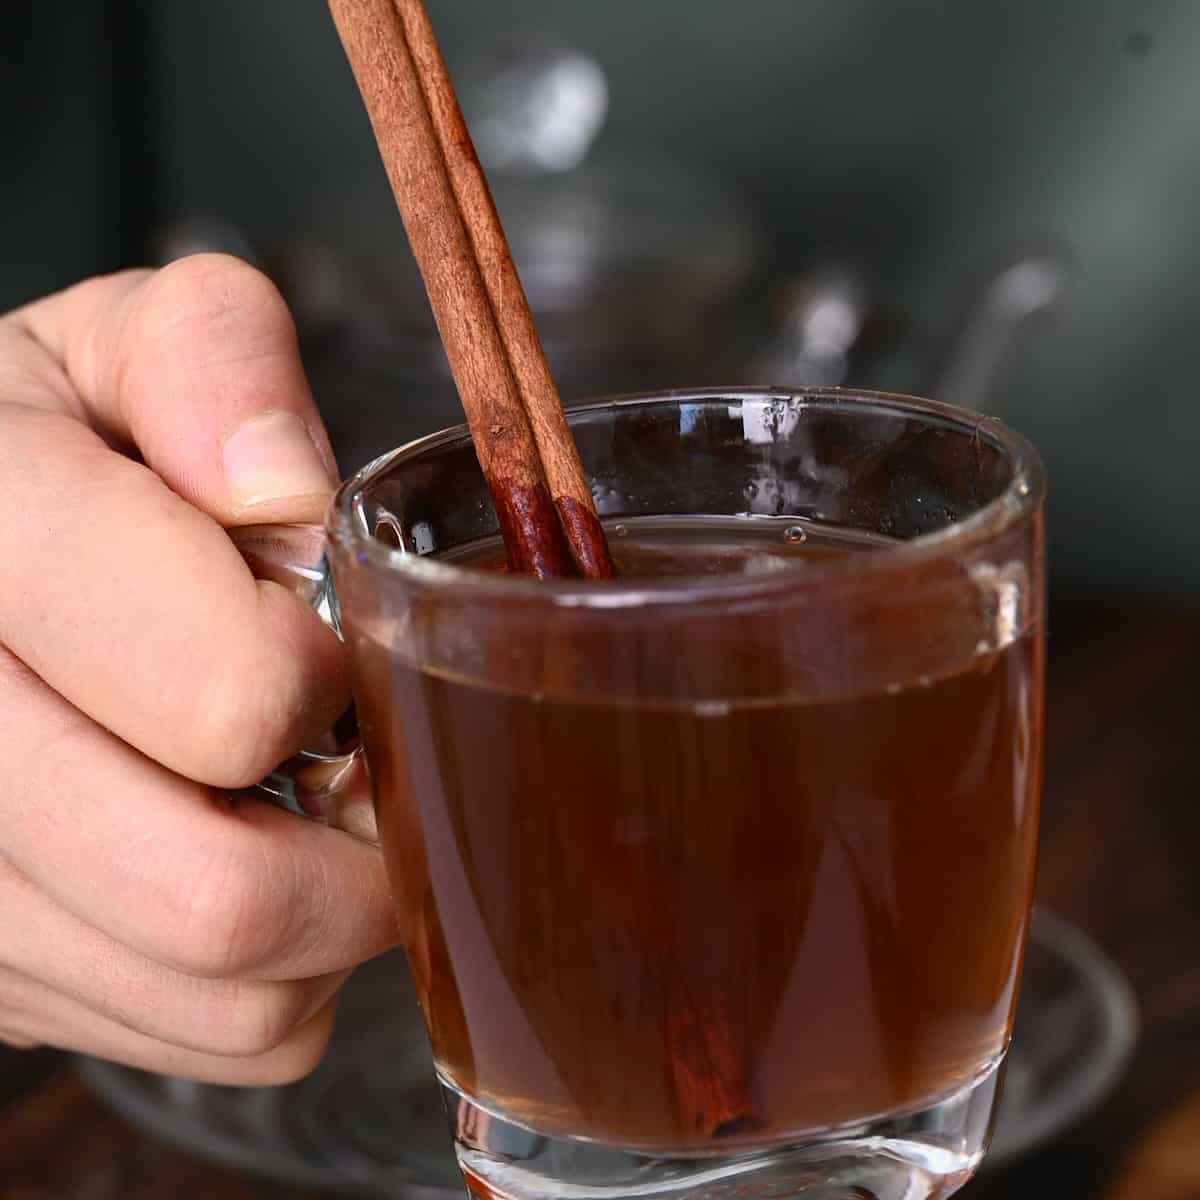 https://www.alphafoodie.com/wp-content/uploads/2022/02/How-to-make-cinnamon-tea-Square.jpeg